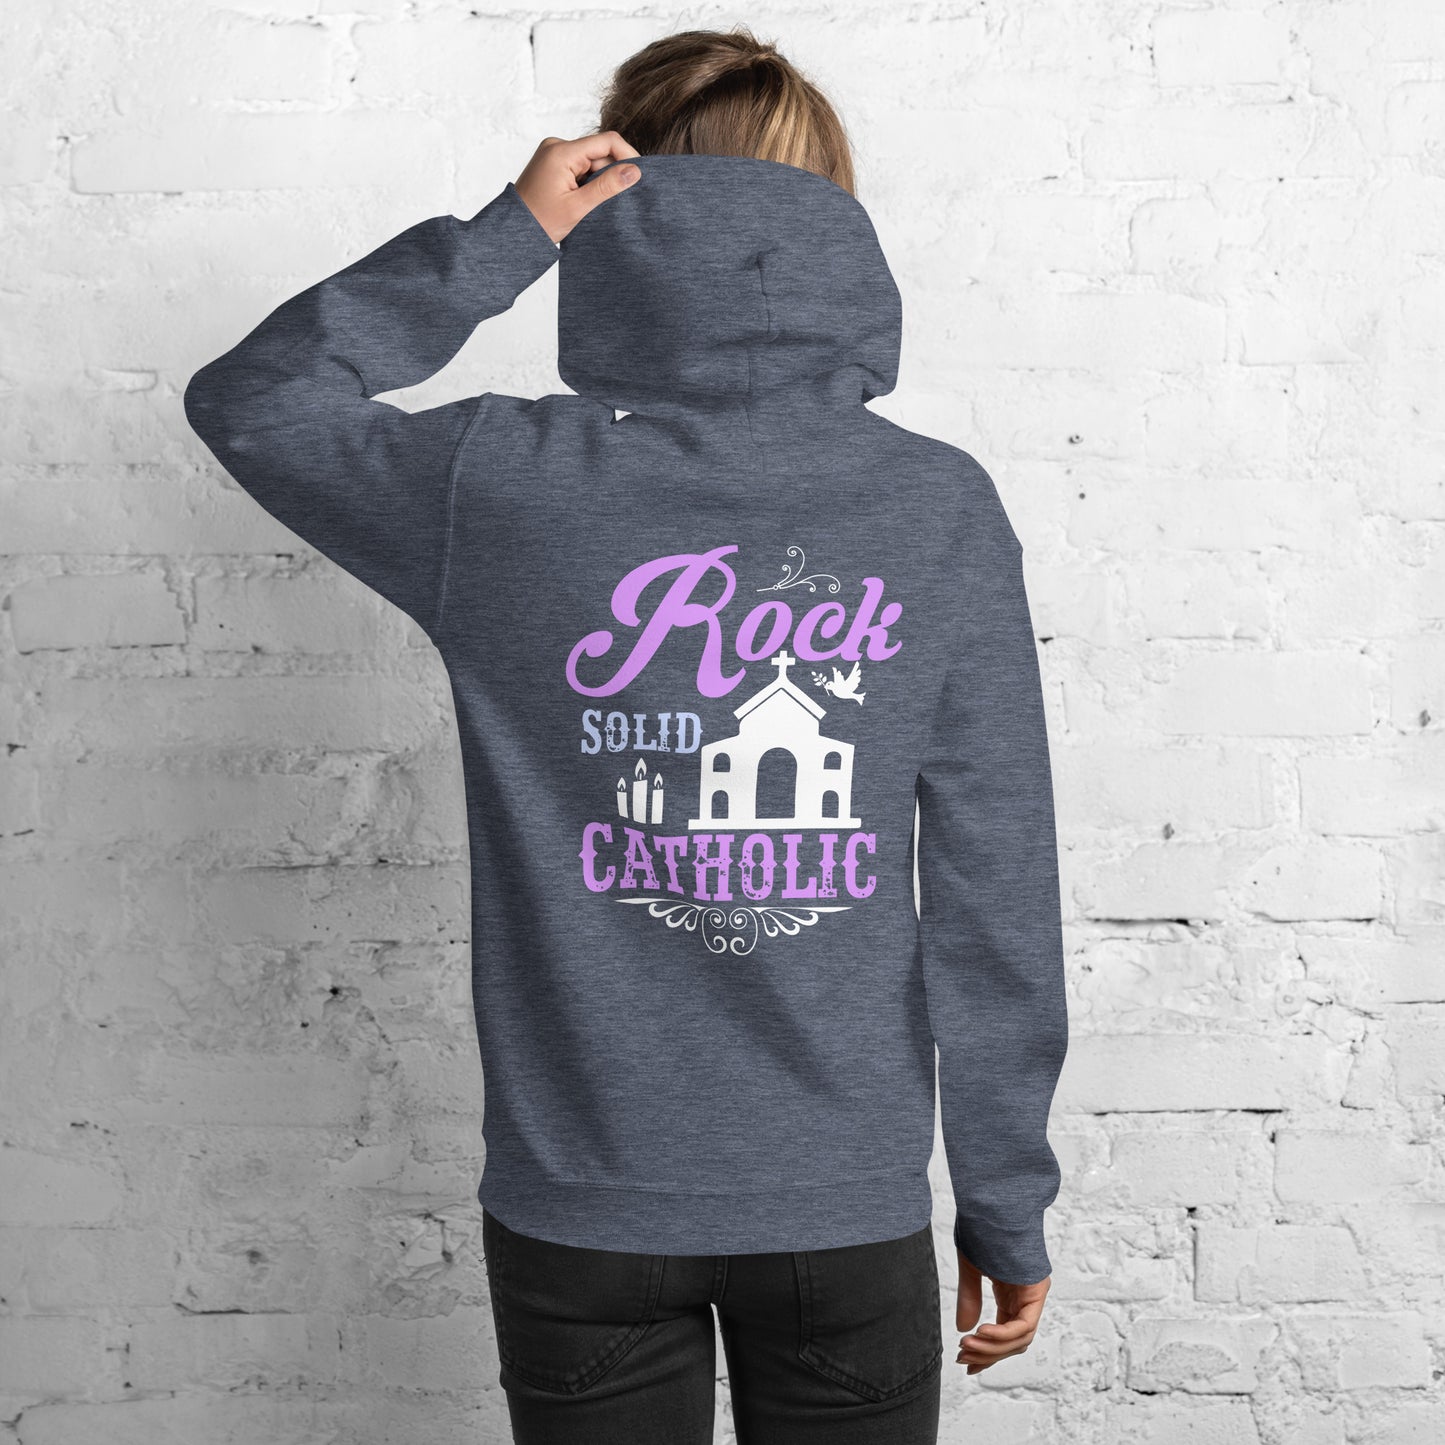 Rock Solid Catholic Women's Hoodie